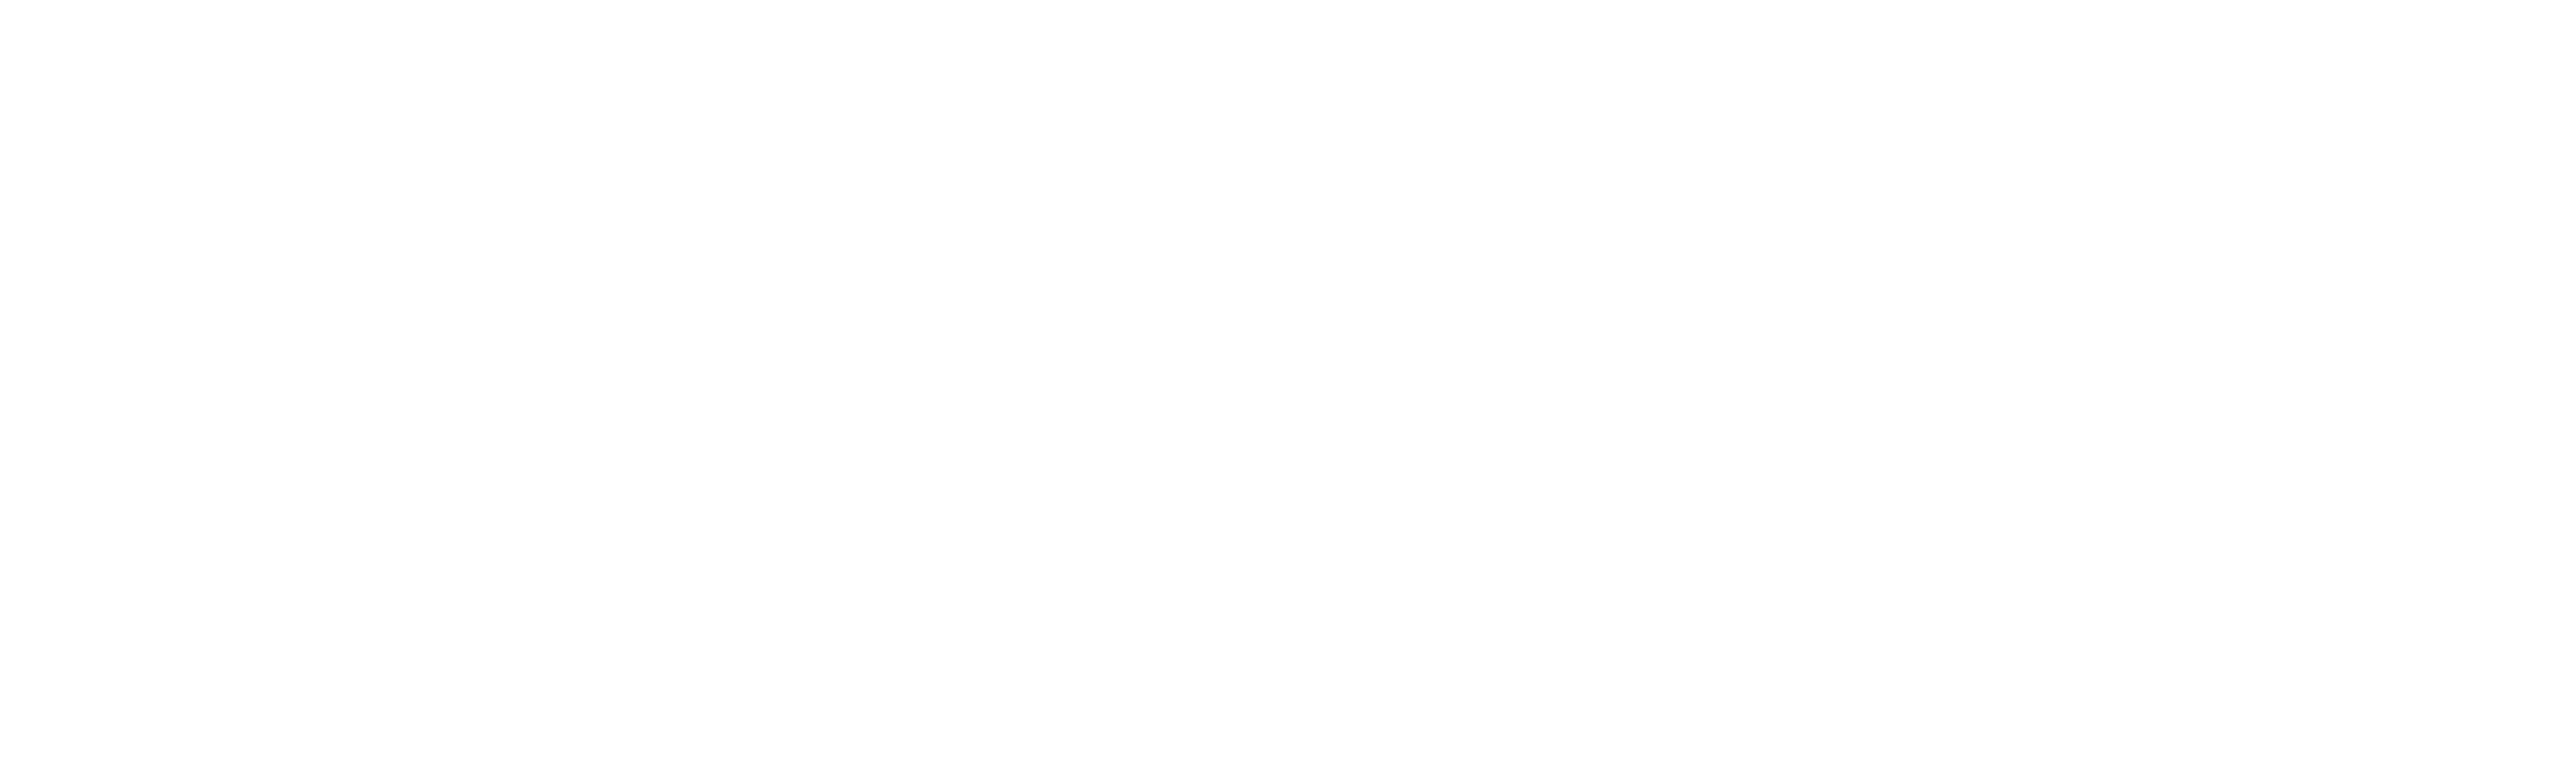 grover_business_logo_white